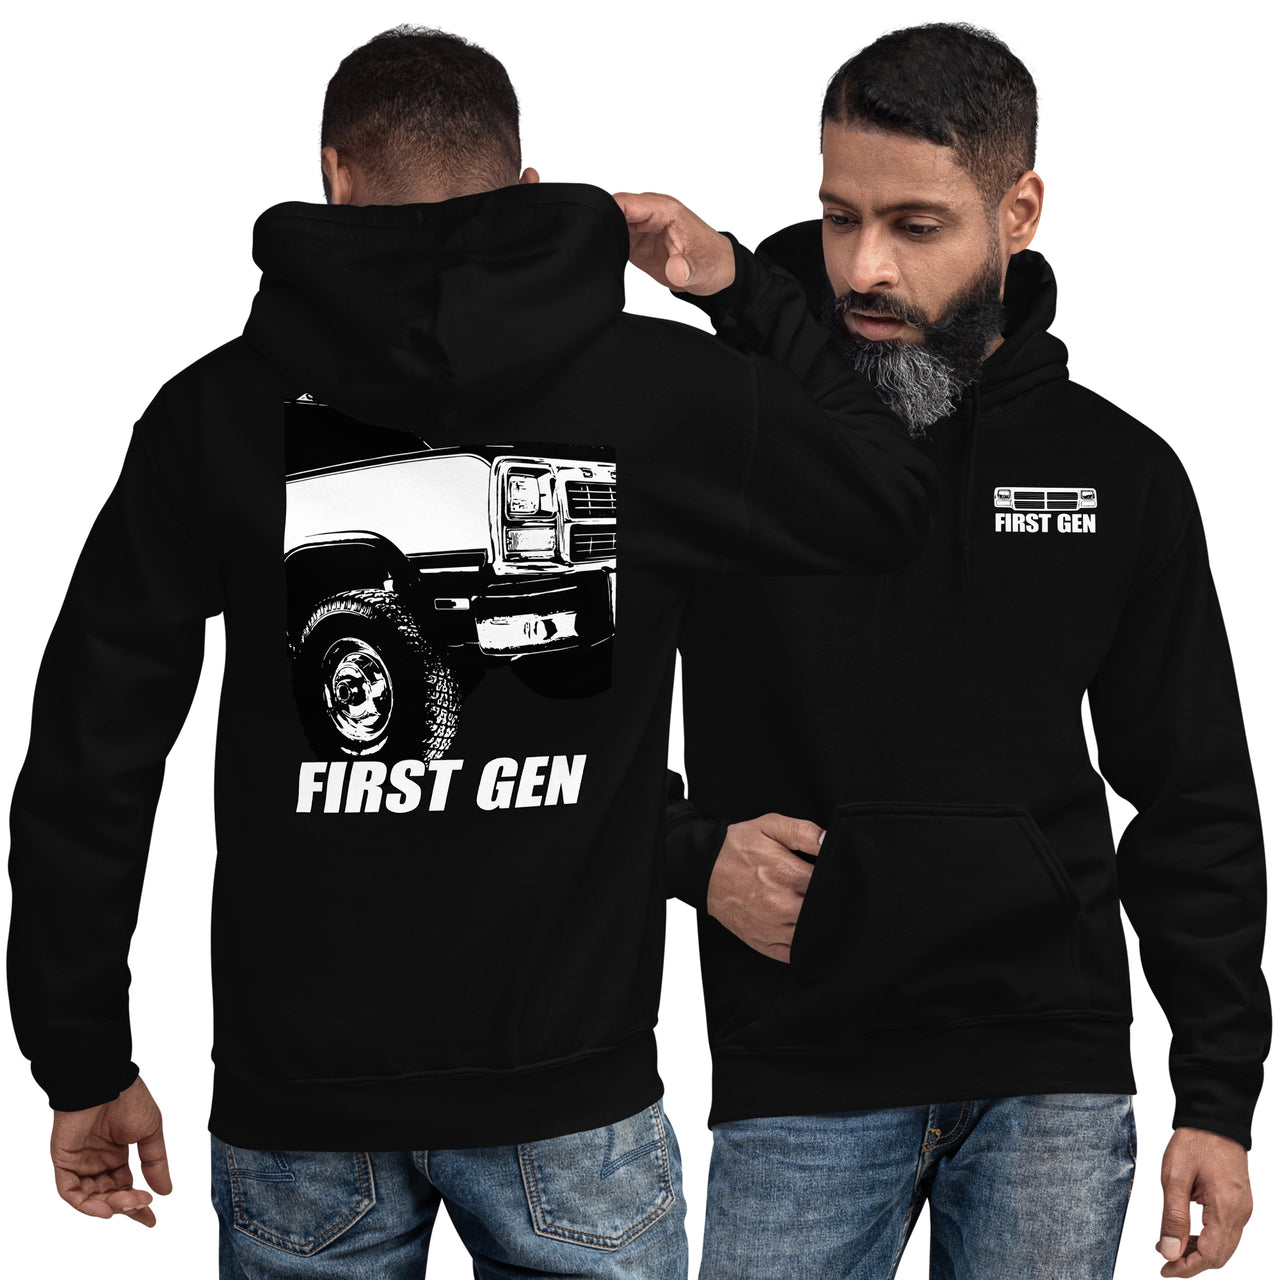 First Gen Truck Hoodie Sweatshirt With Close Up Design modeled in black